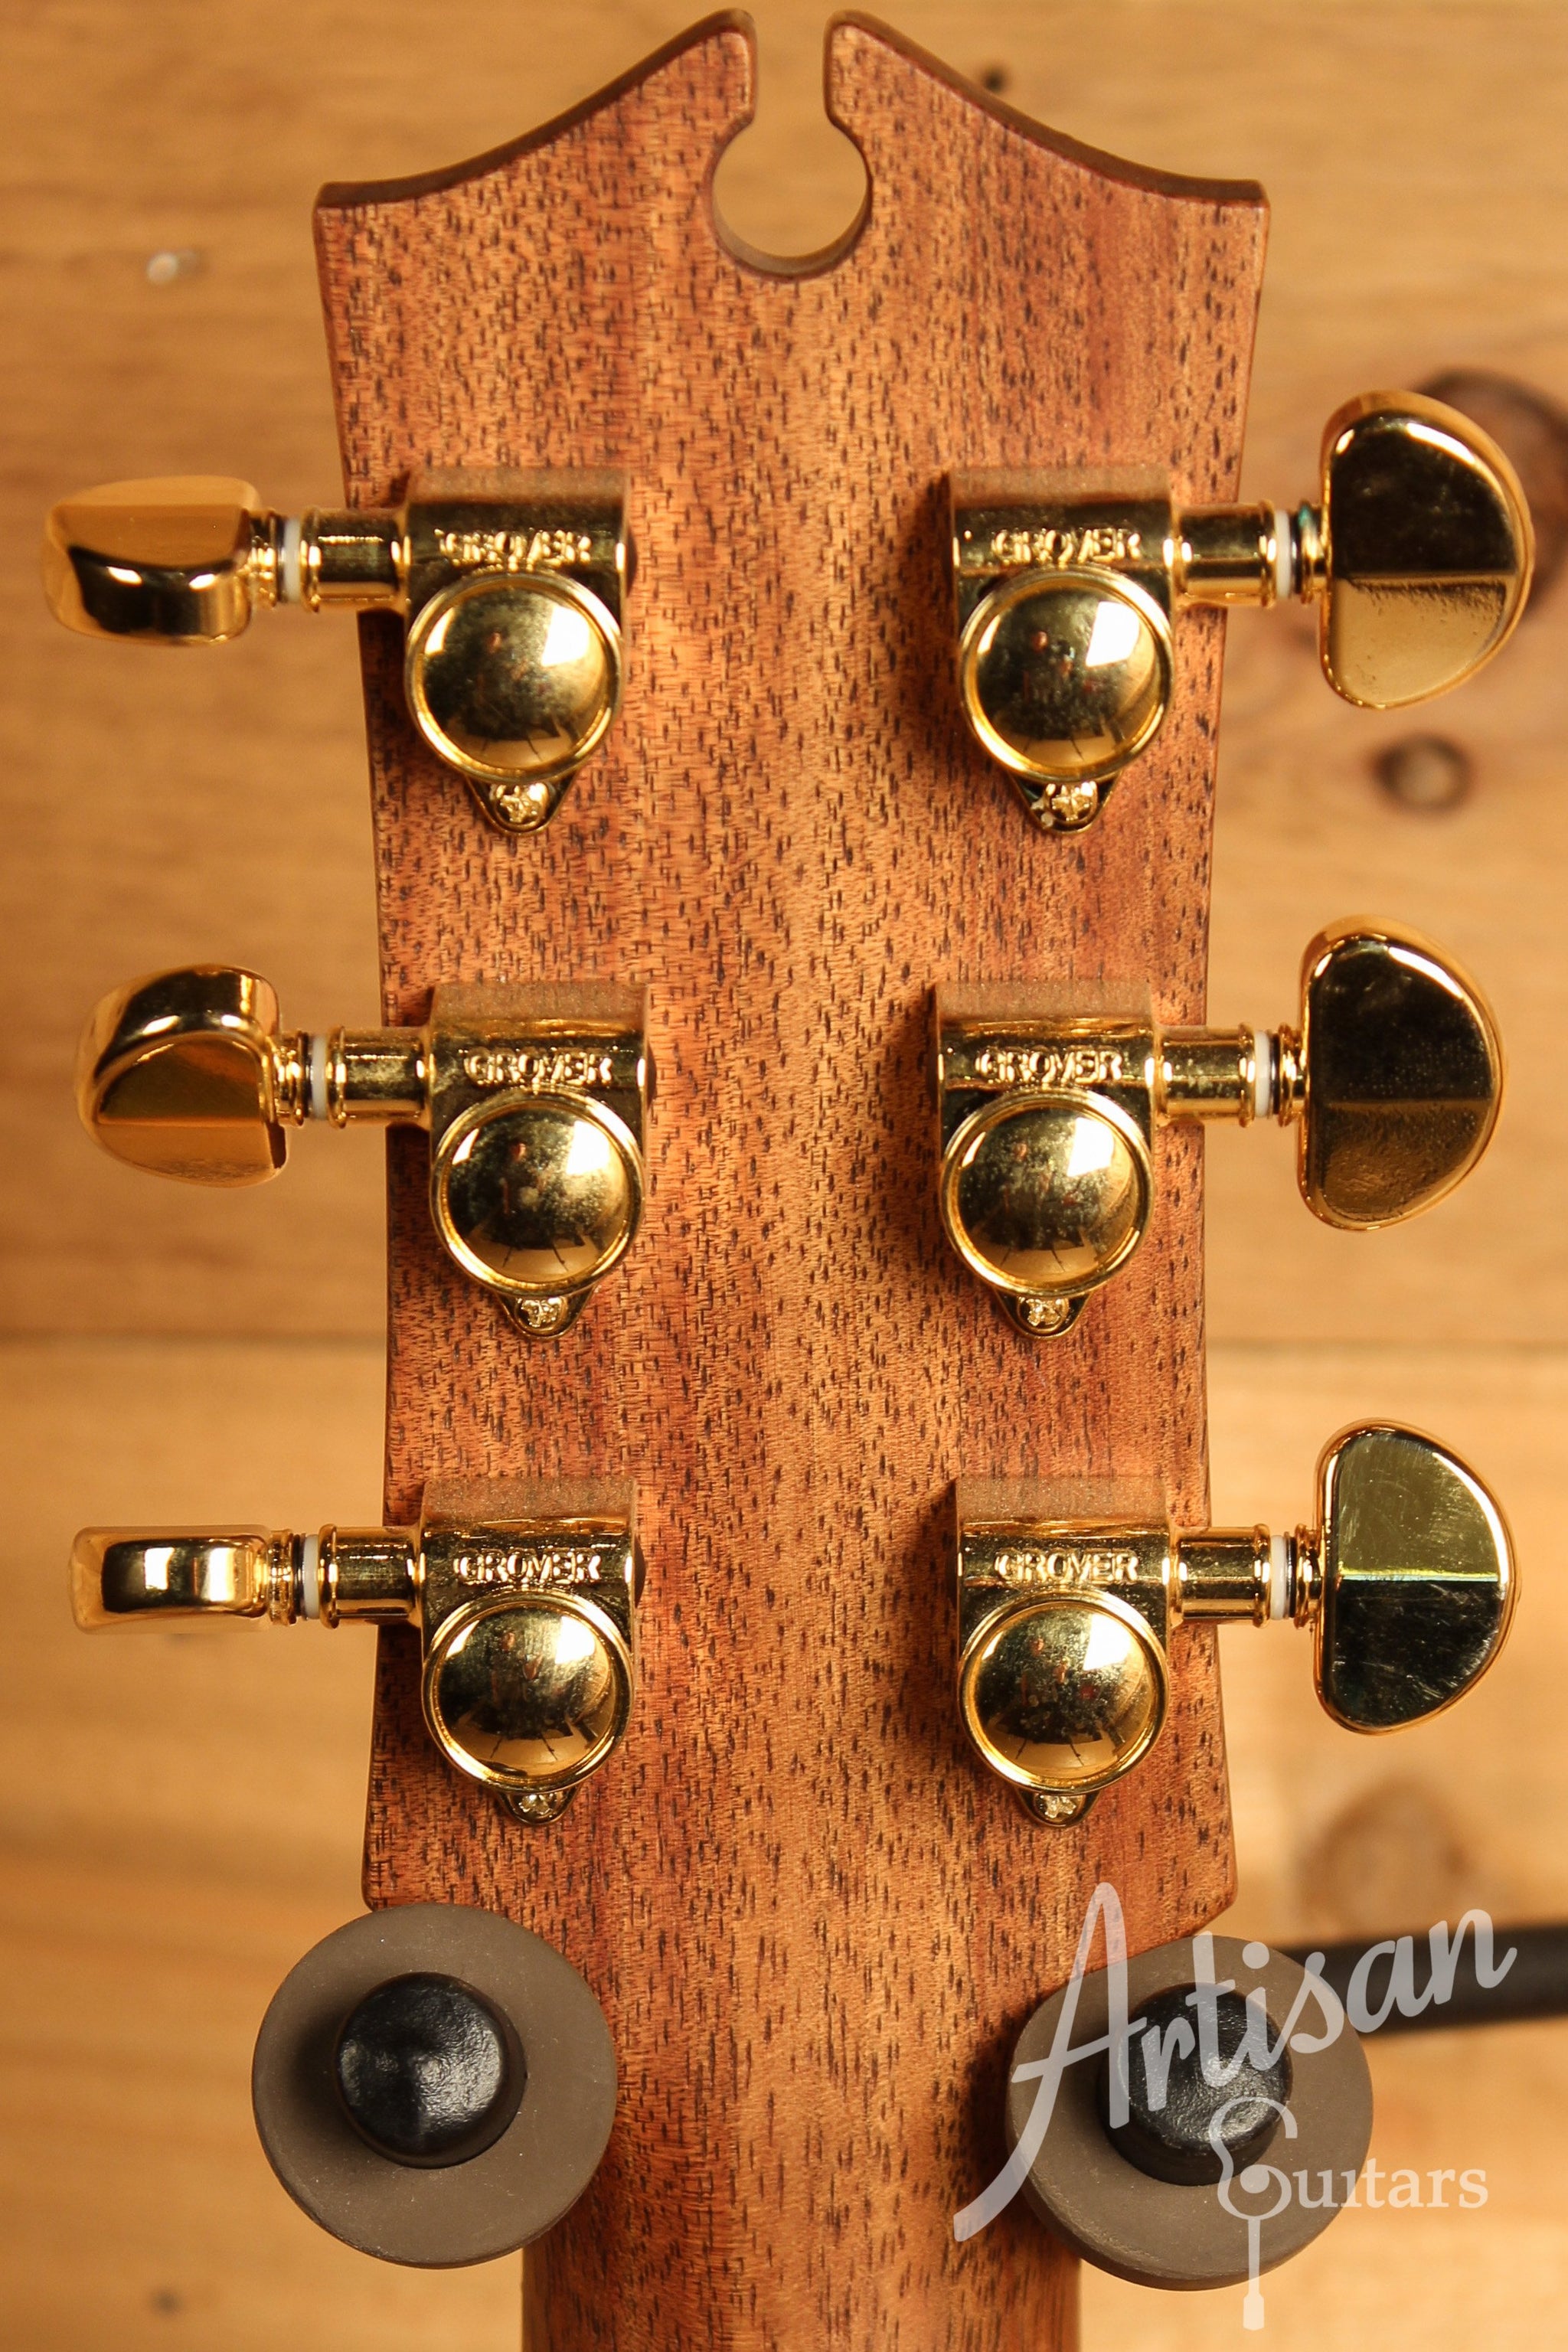 Maton EA808 Australian Series Guitar Bunya and Australian Blackwood ID-12612 - Artisan Guitars